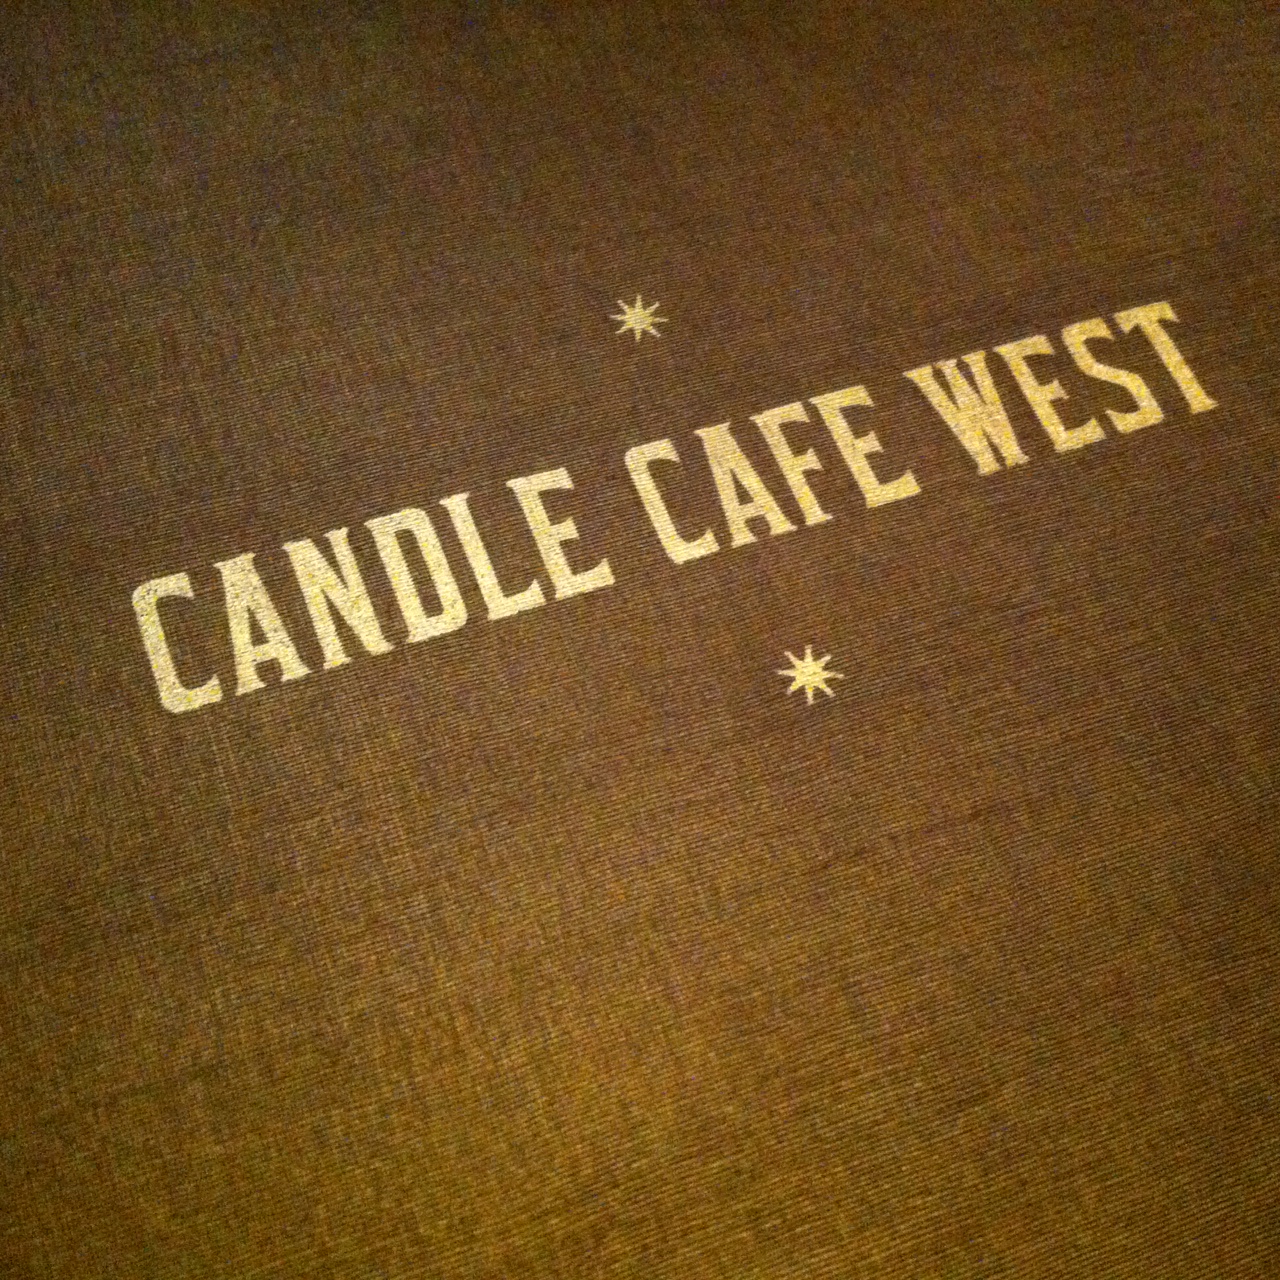 Candle Cafe West - Upper West Side